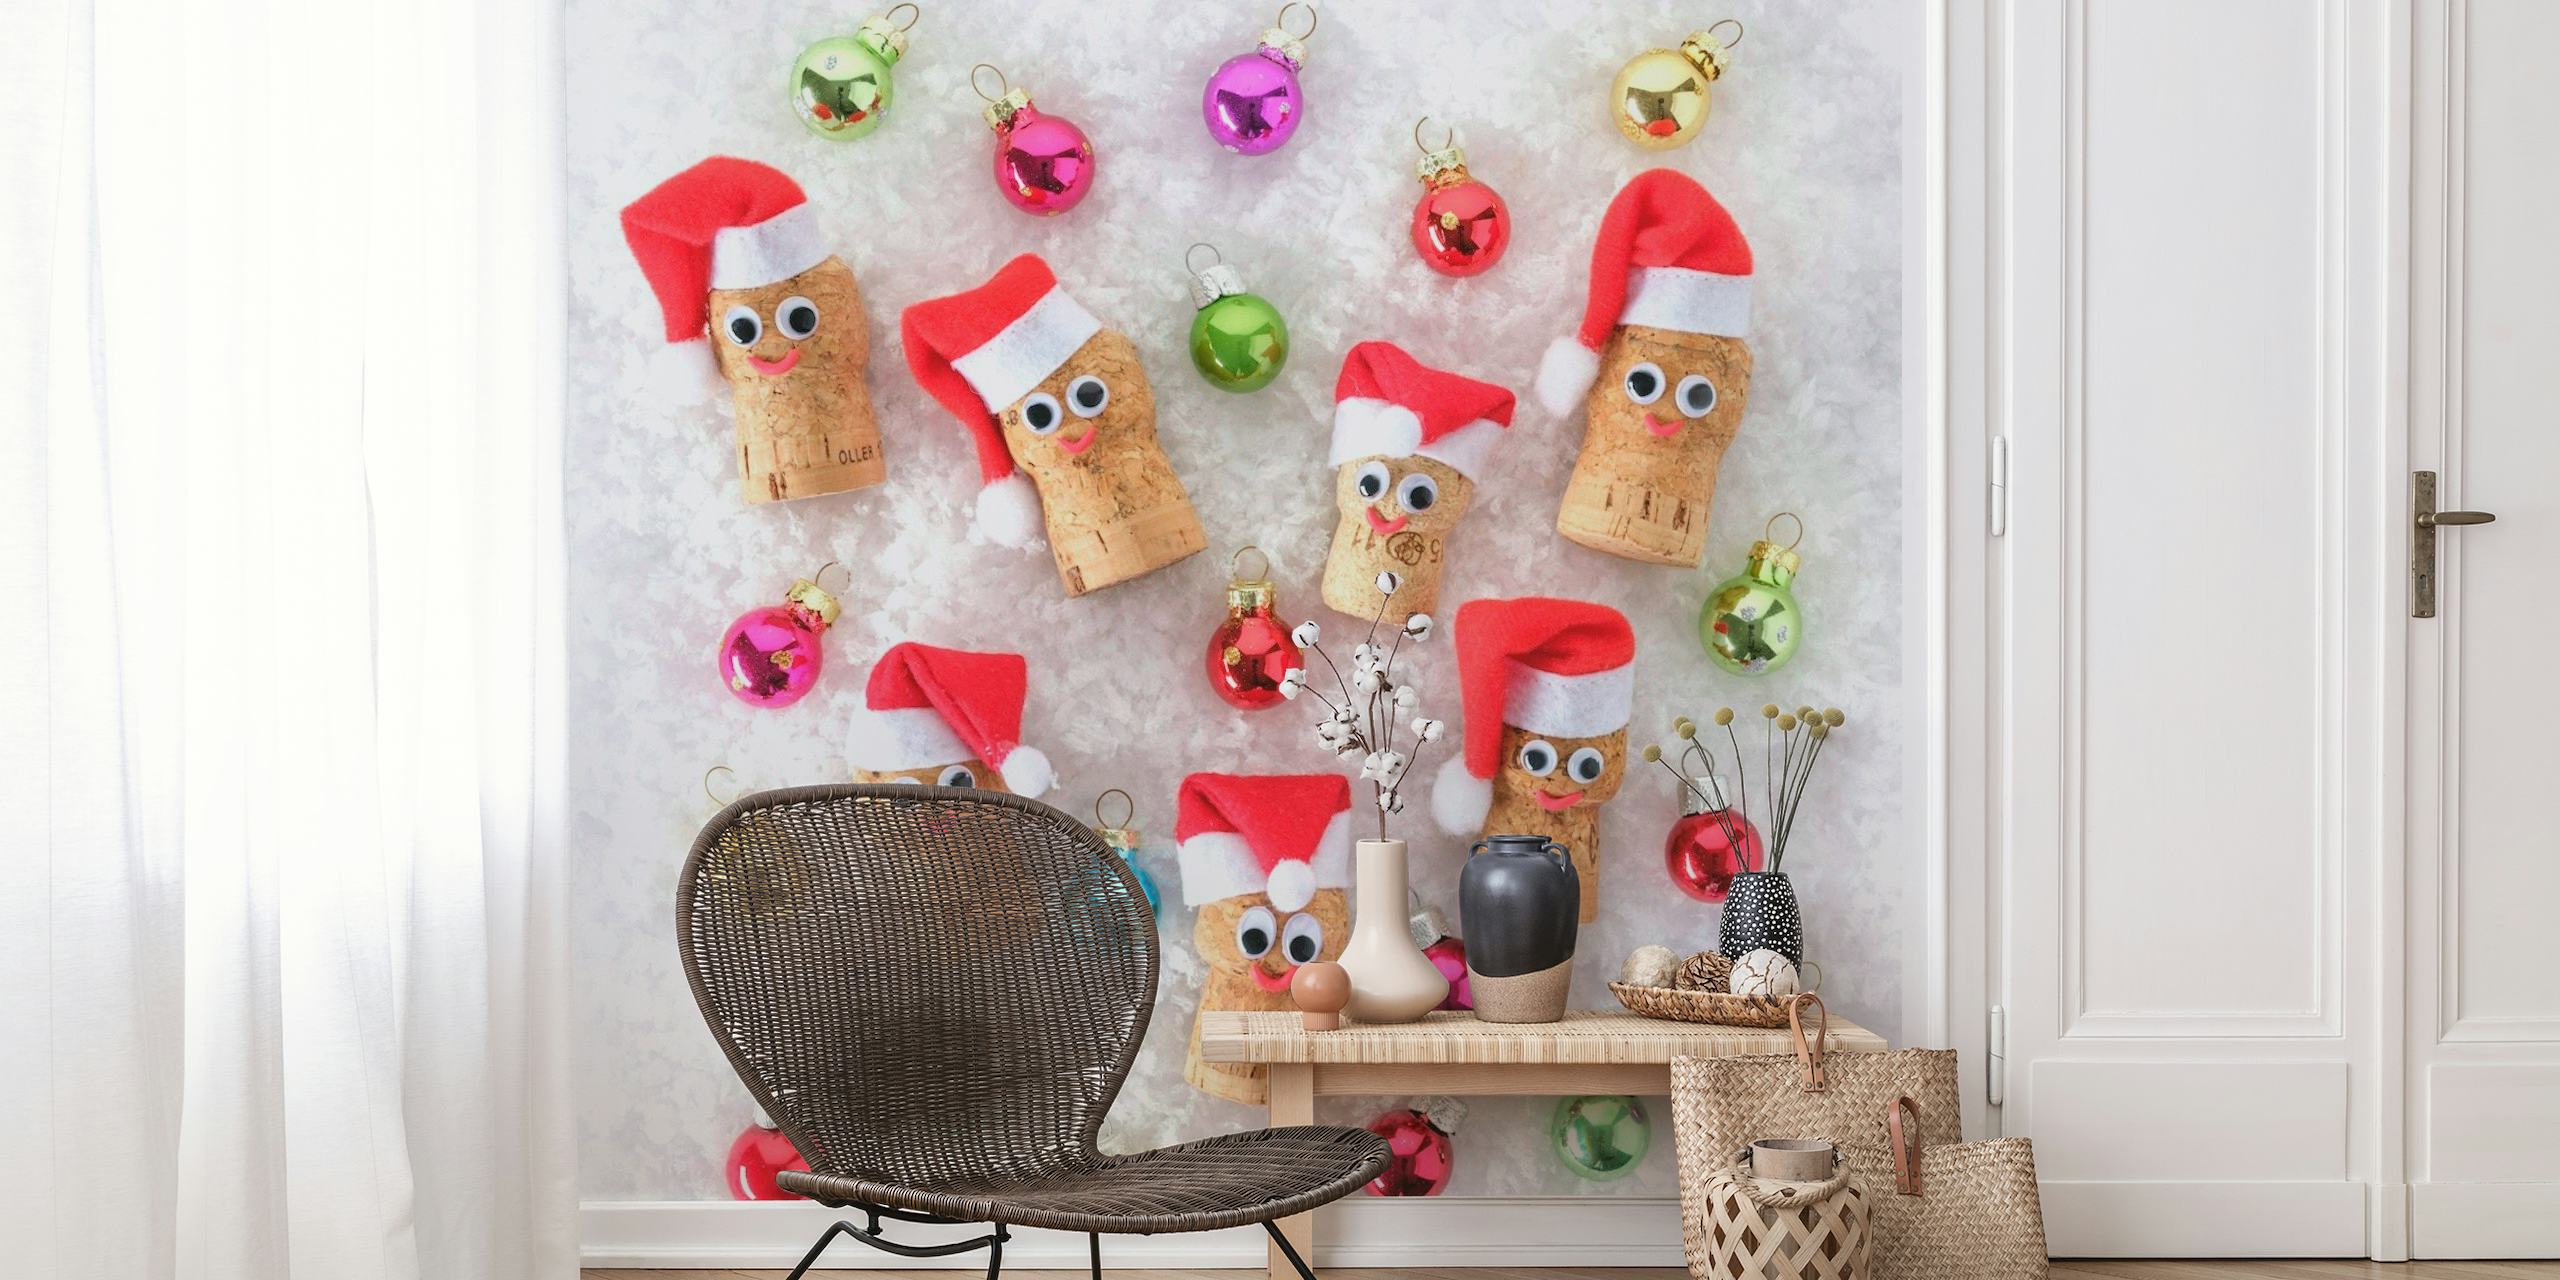 Fun Christmas corks wallpaper